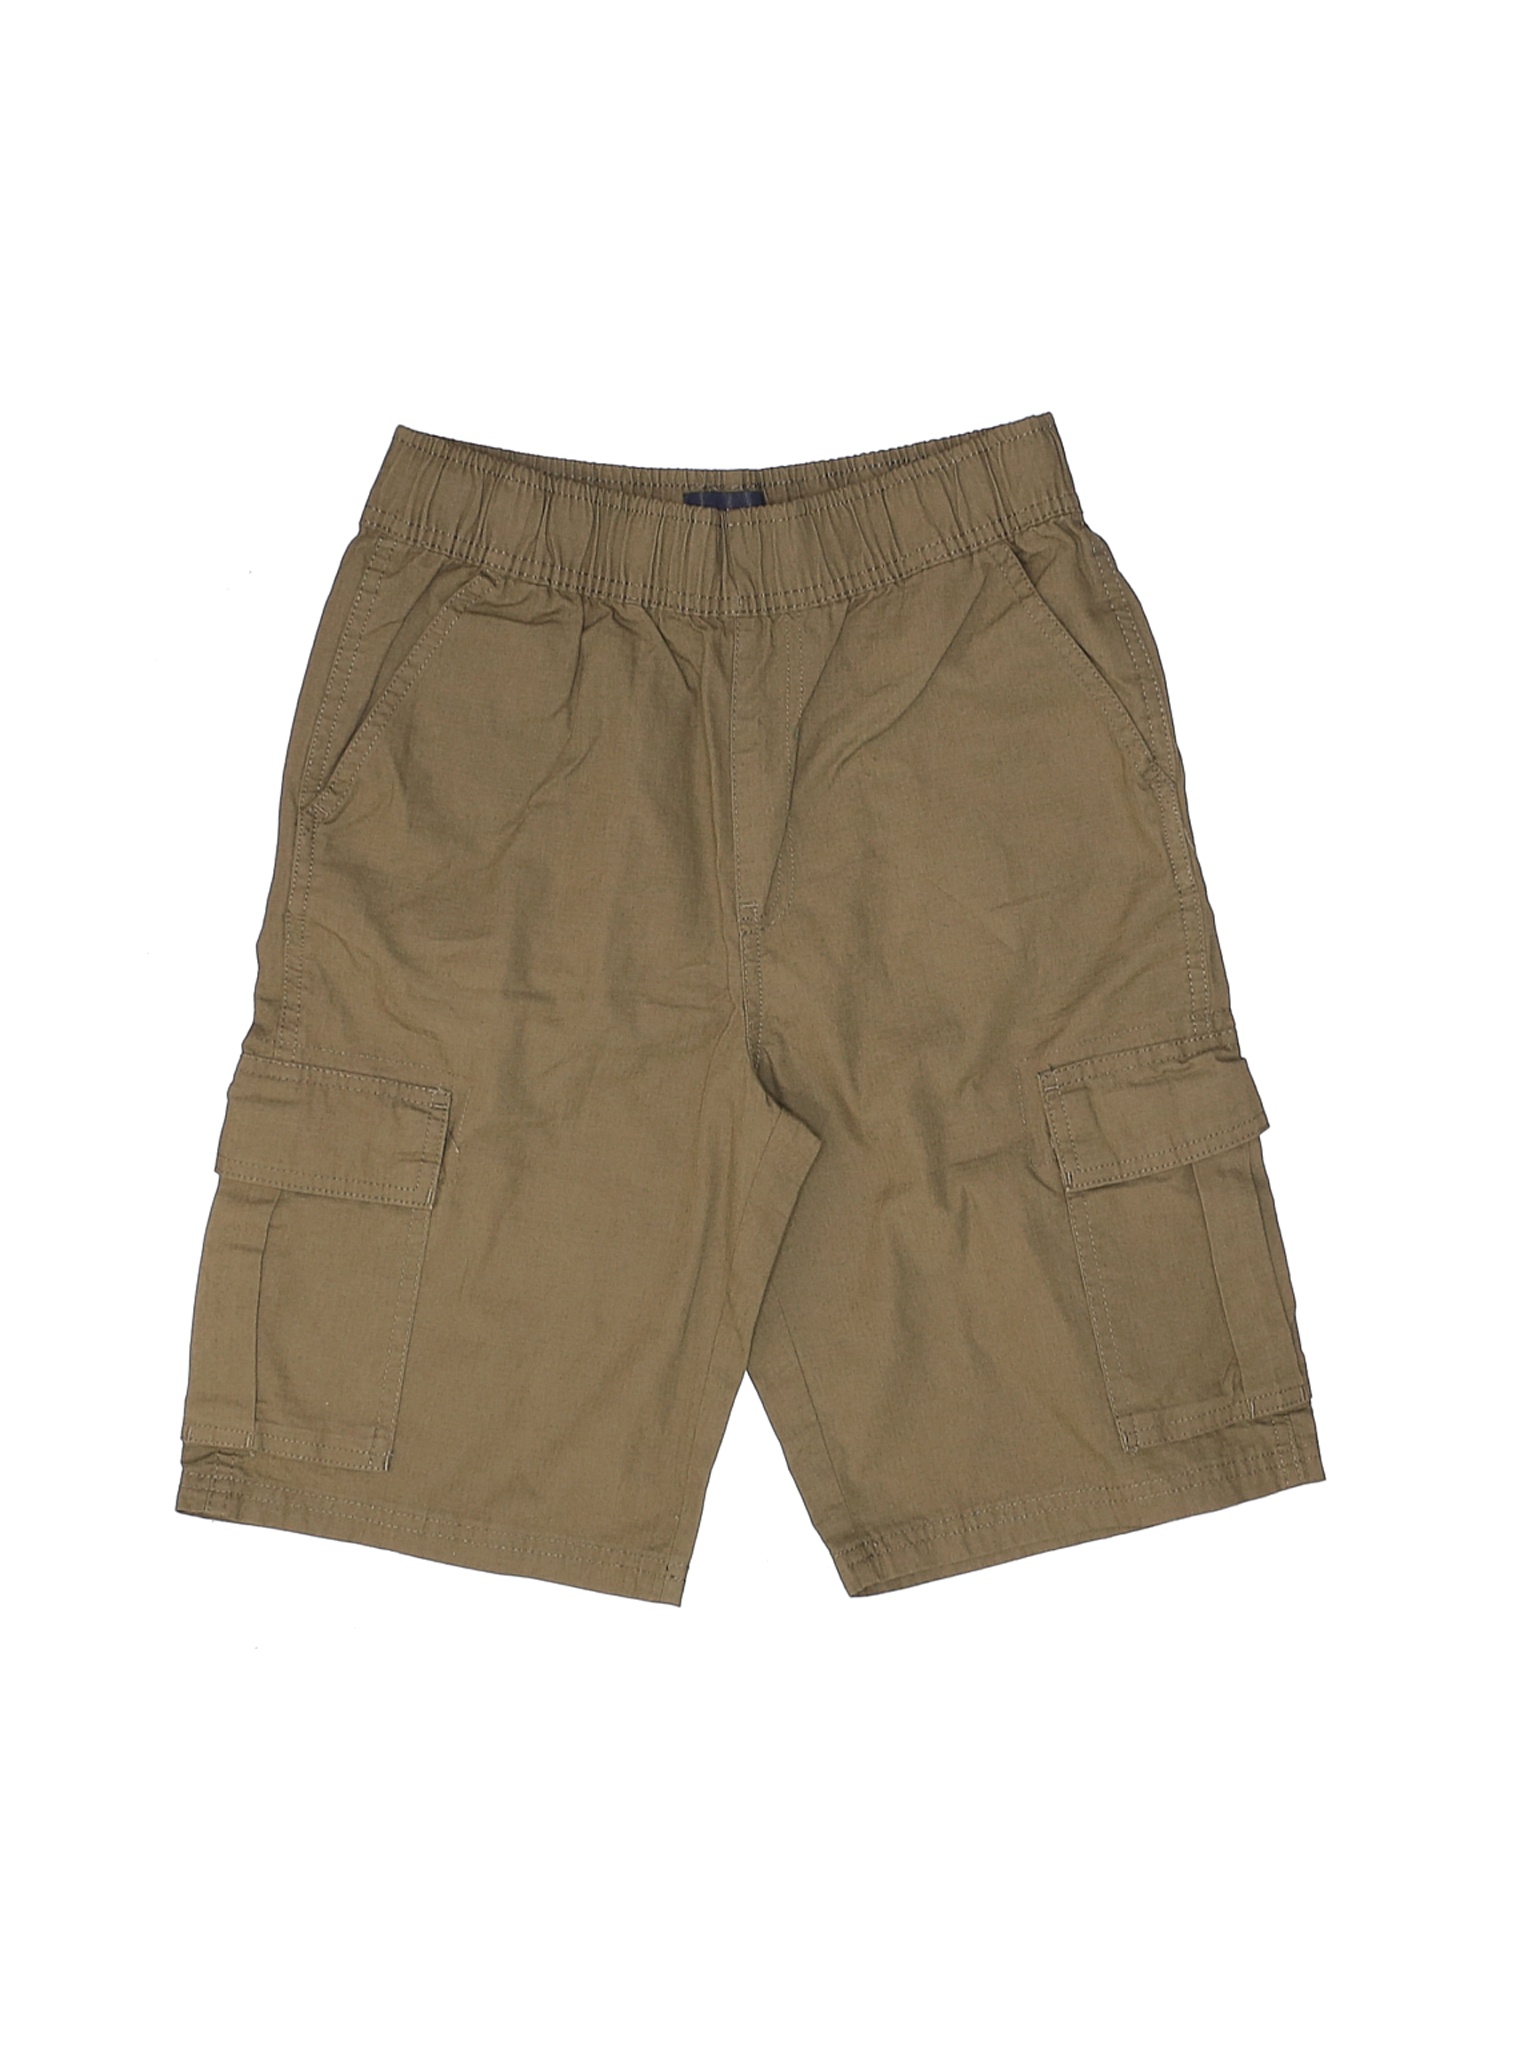 The Children's Place Boys Green Cargo Shorts 12 | eBay